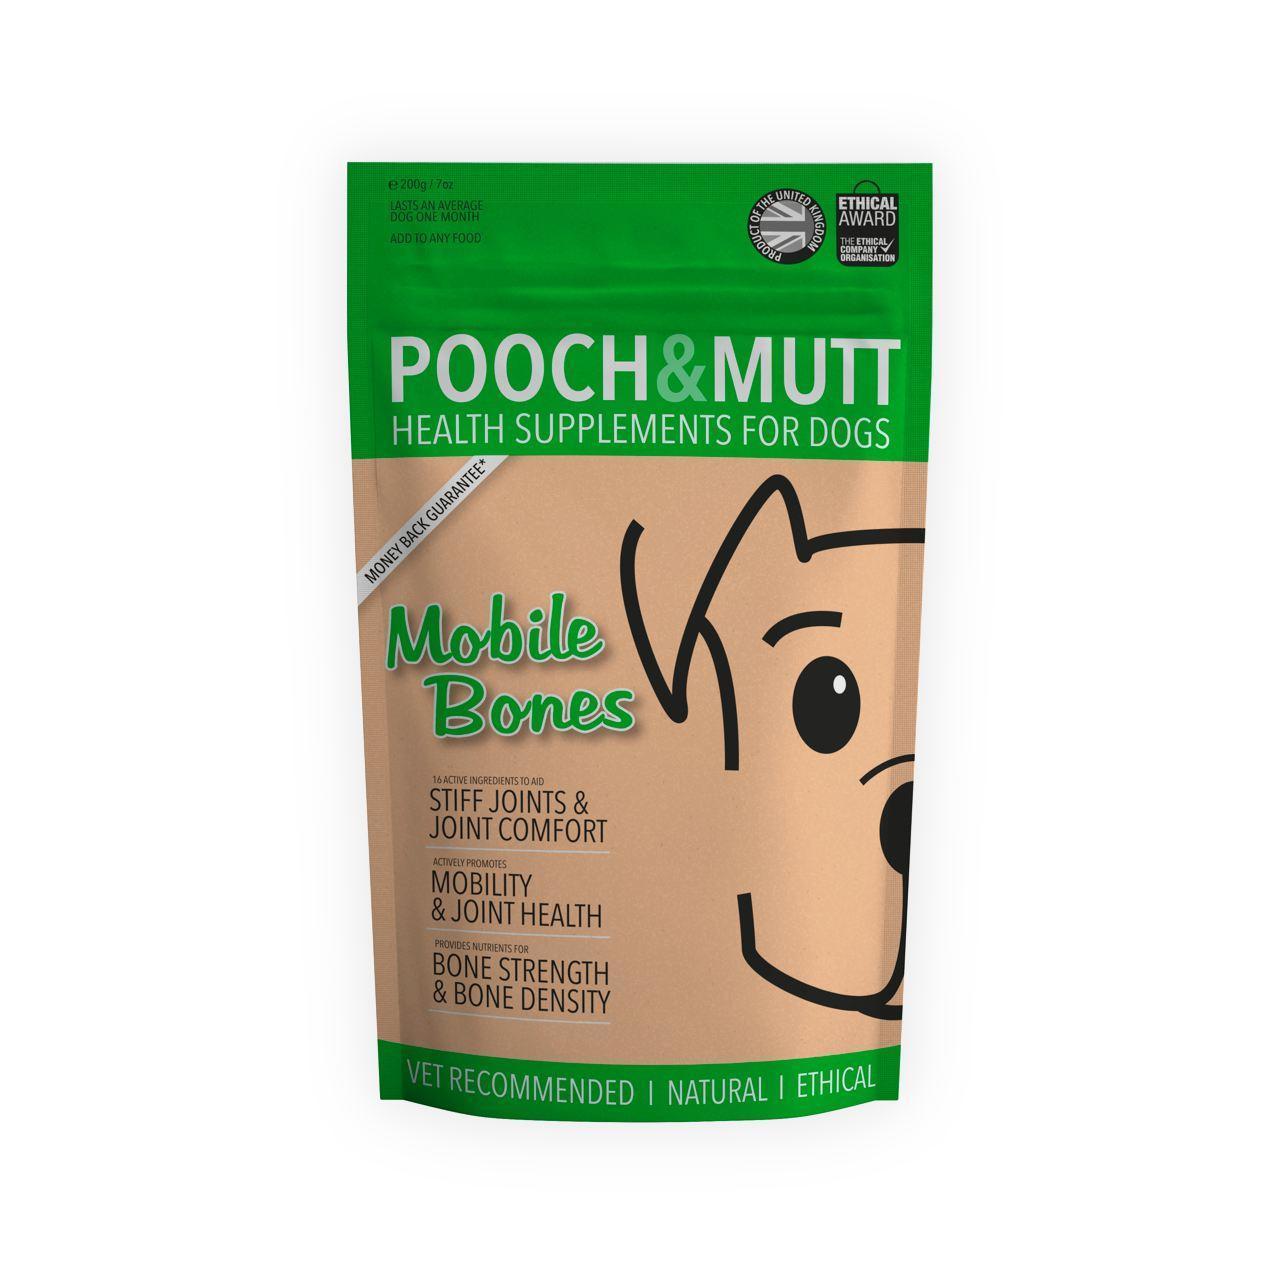 Pooch & Mutt Mobile Bones